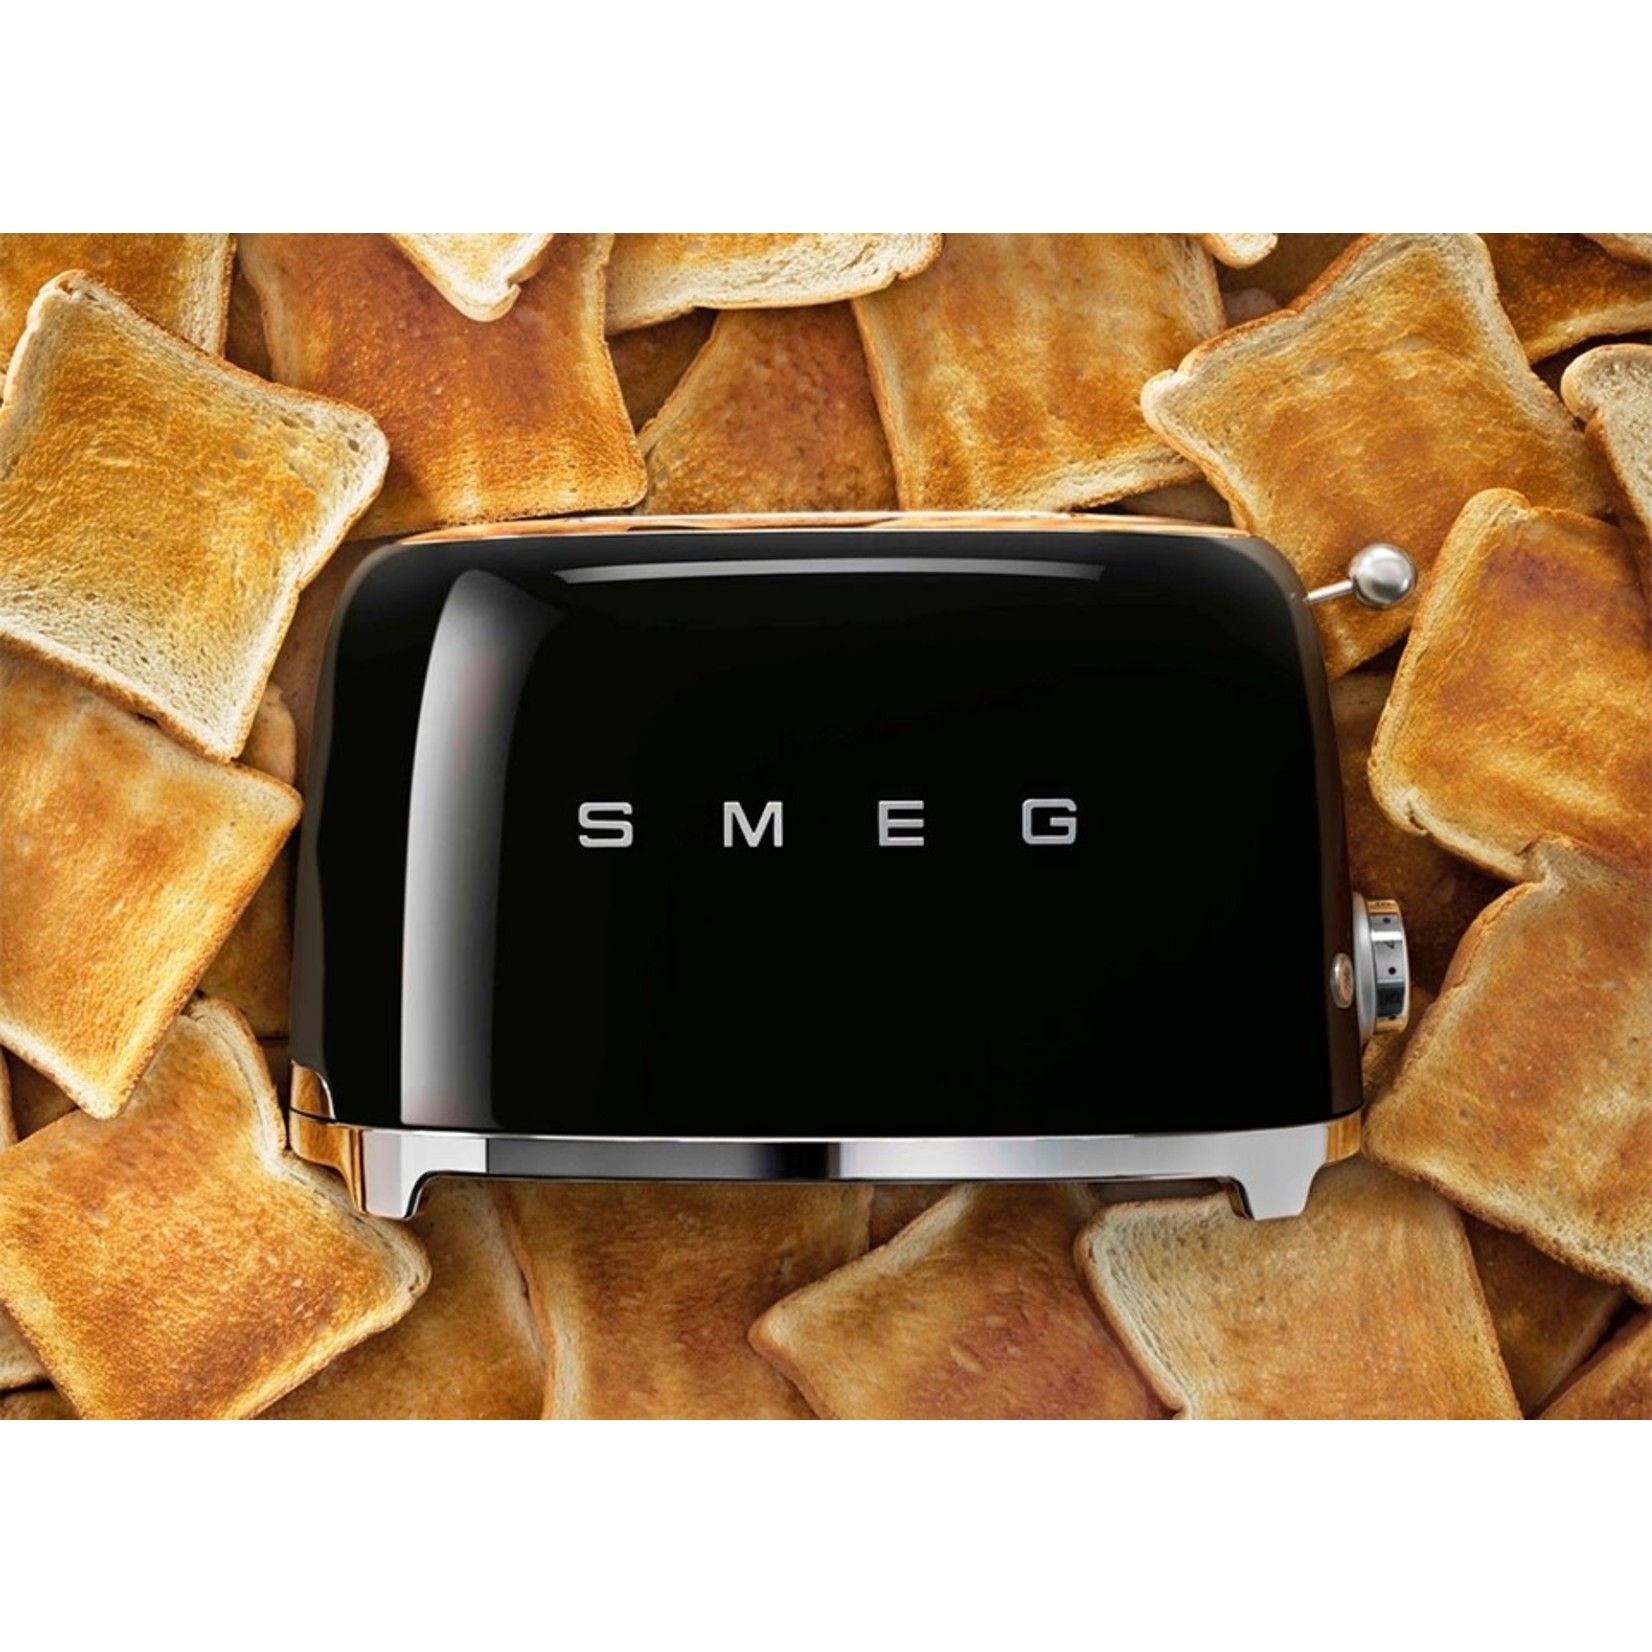 Smeg 50s Style 2-Slice Toaster - Black